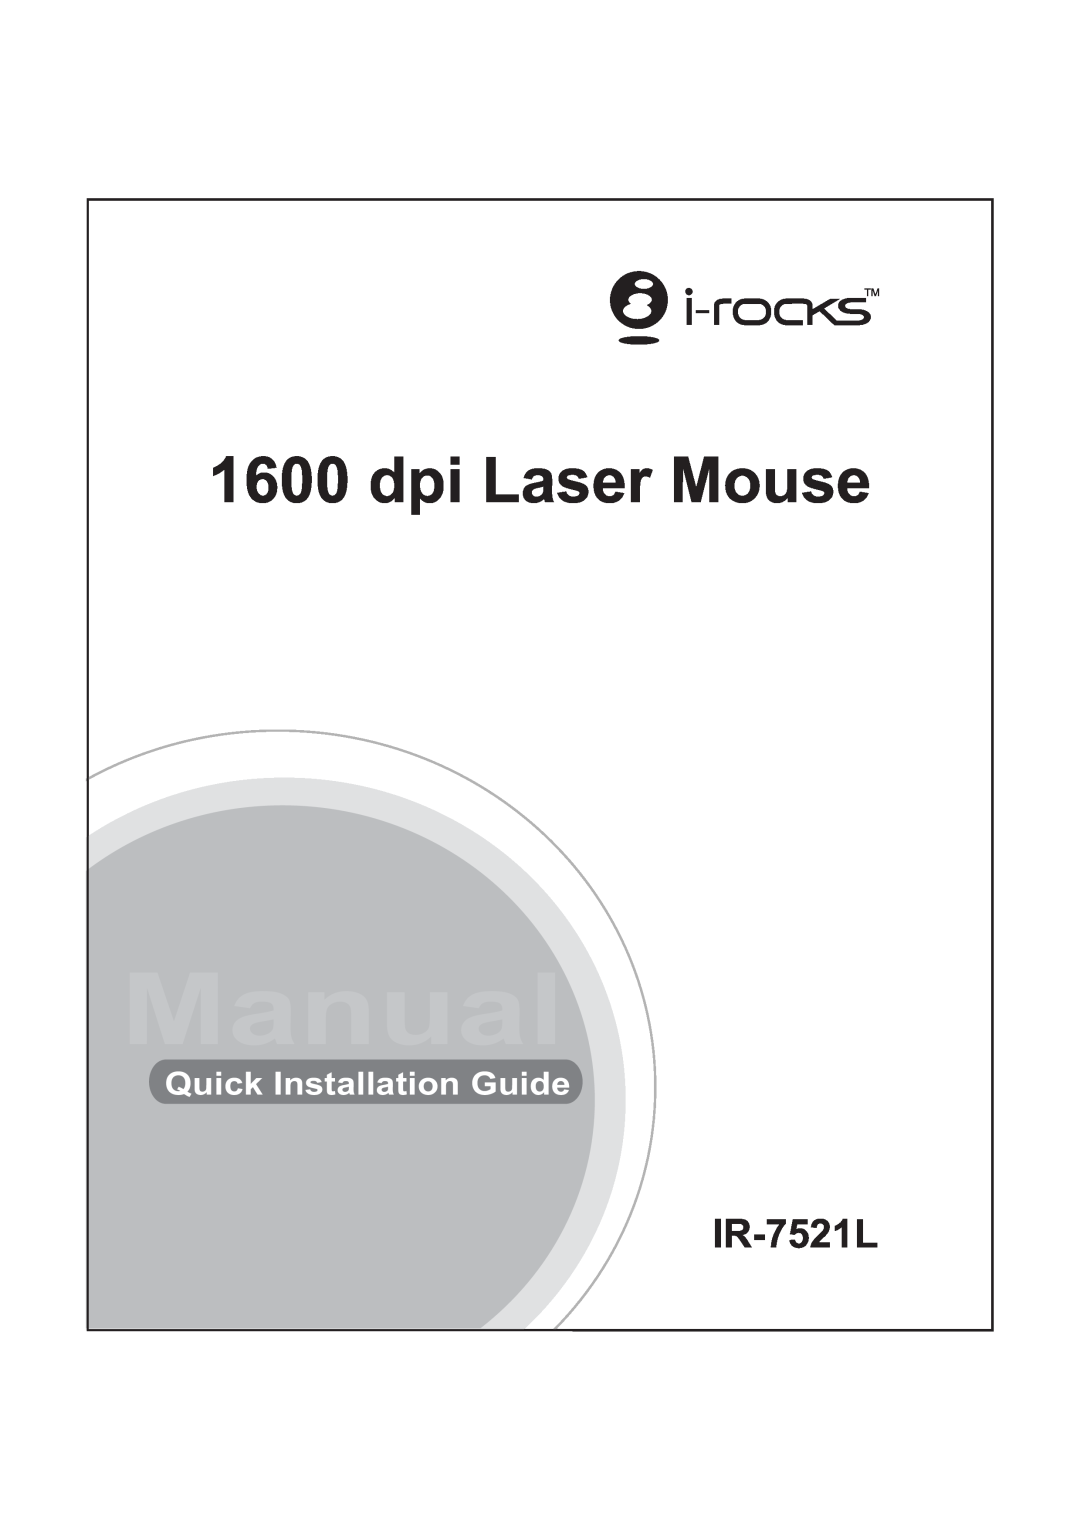 I-Rocks IR-7521L manual Man u al, dpi Laser Mouse, Quick Installation Guide 